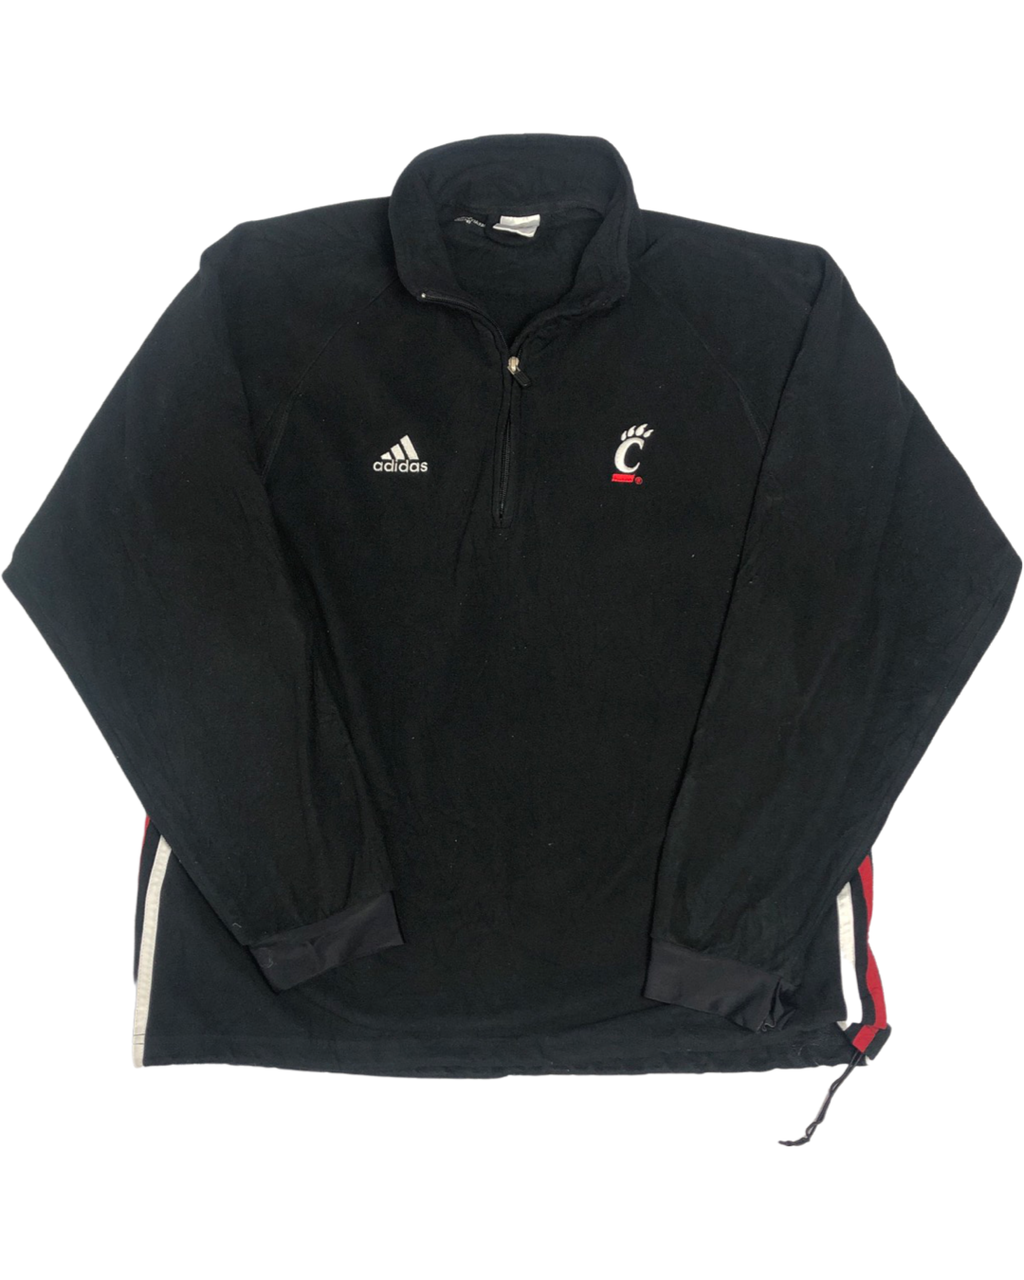 Vintage Cincinnati Bearcats NCAA Black Sweater by Adidas (S)